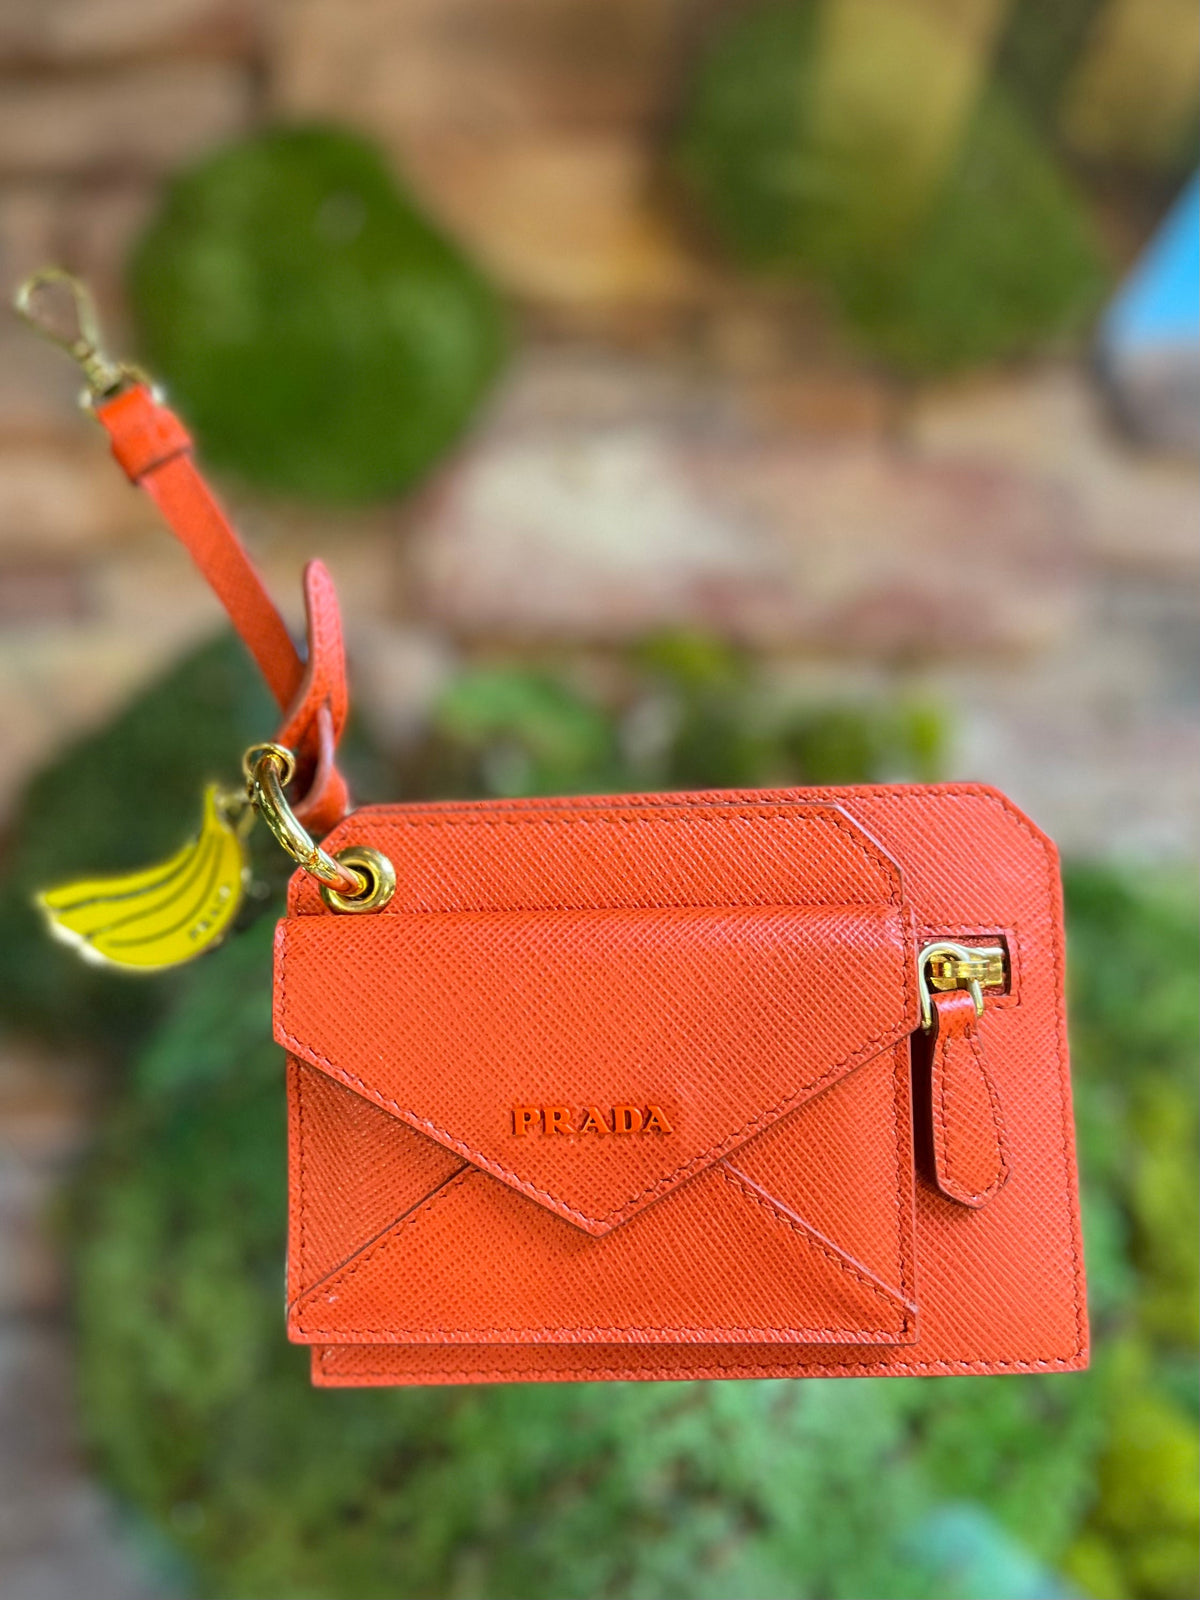 PRADA Orange Saffiano Leather Wallet Key Chain